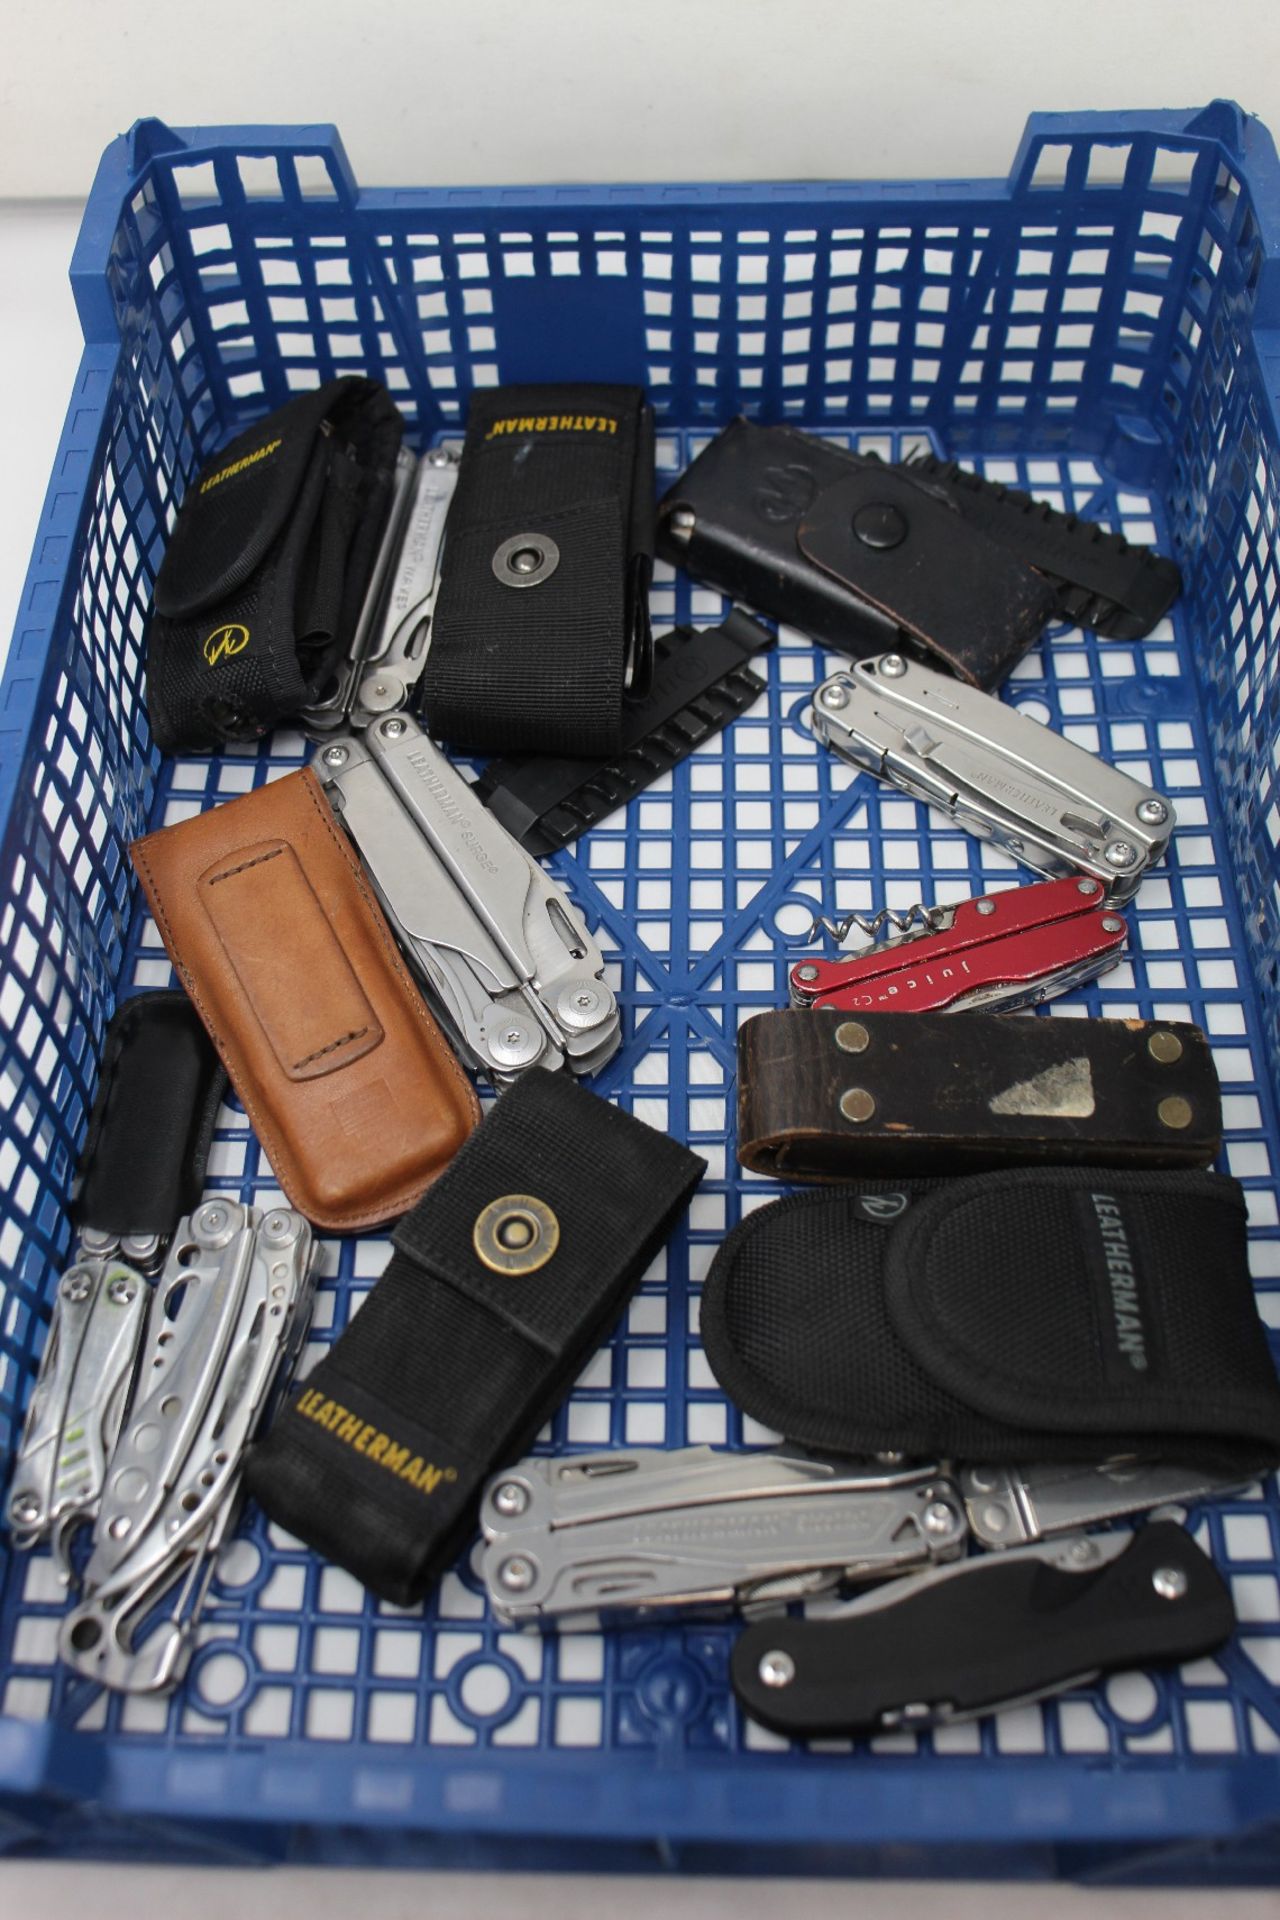 Seventeen assorted Leatherman multi-tools to include Surge, Waves, Wingman, Sidekick, Skeletool